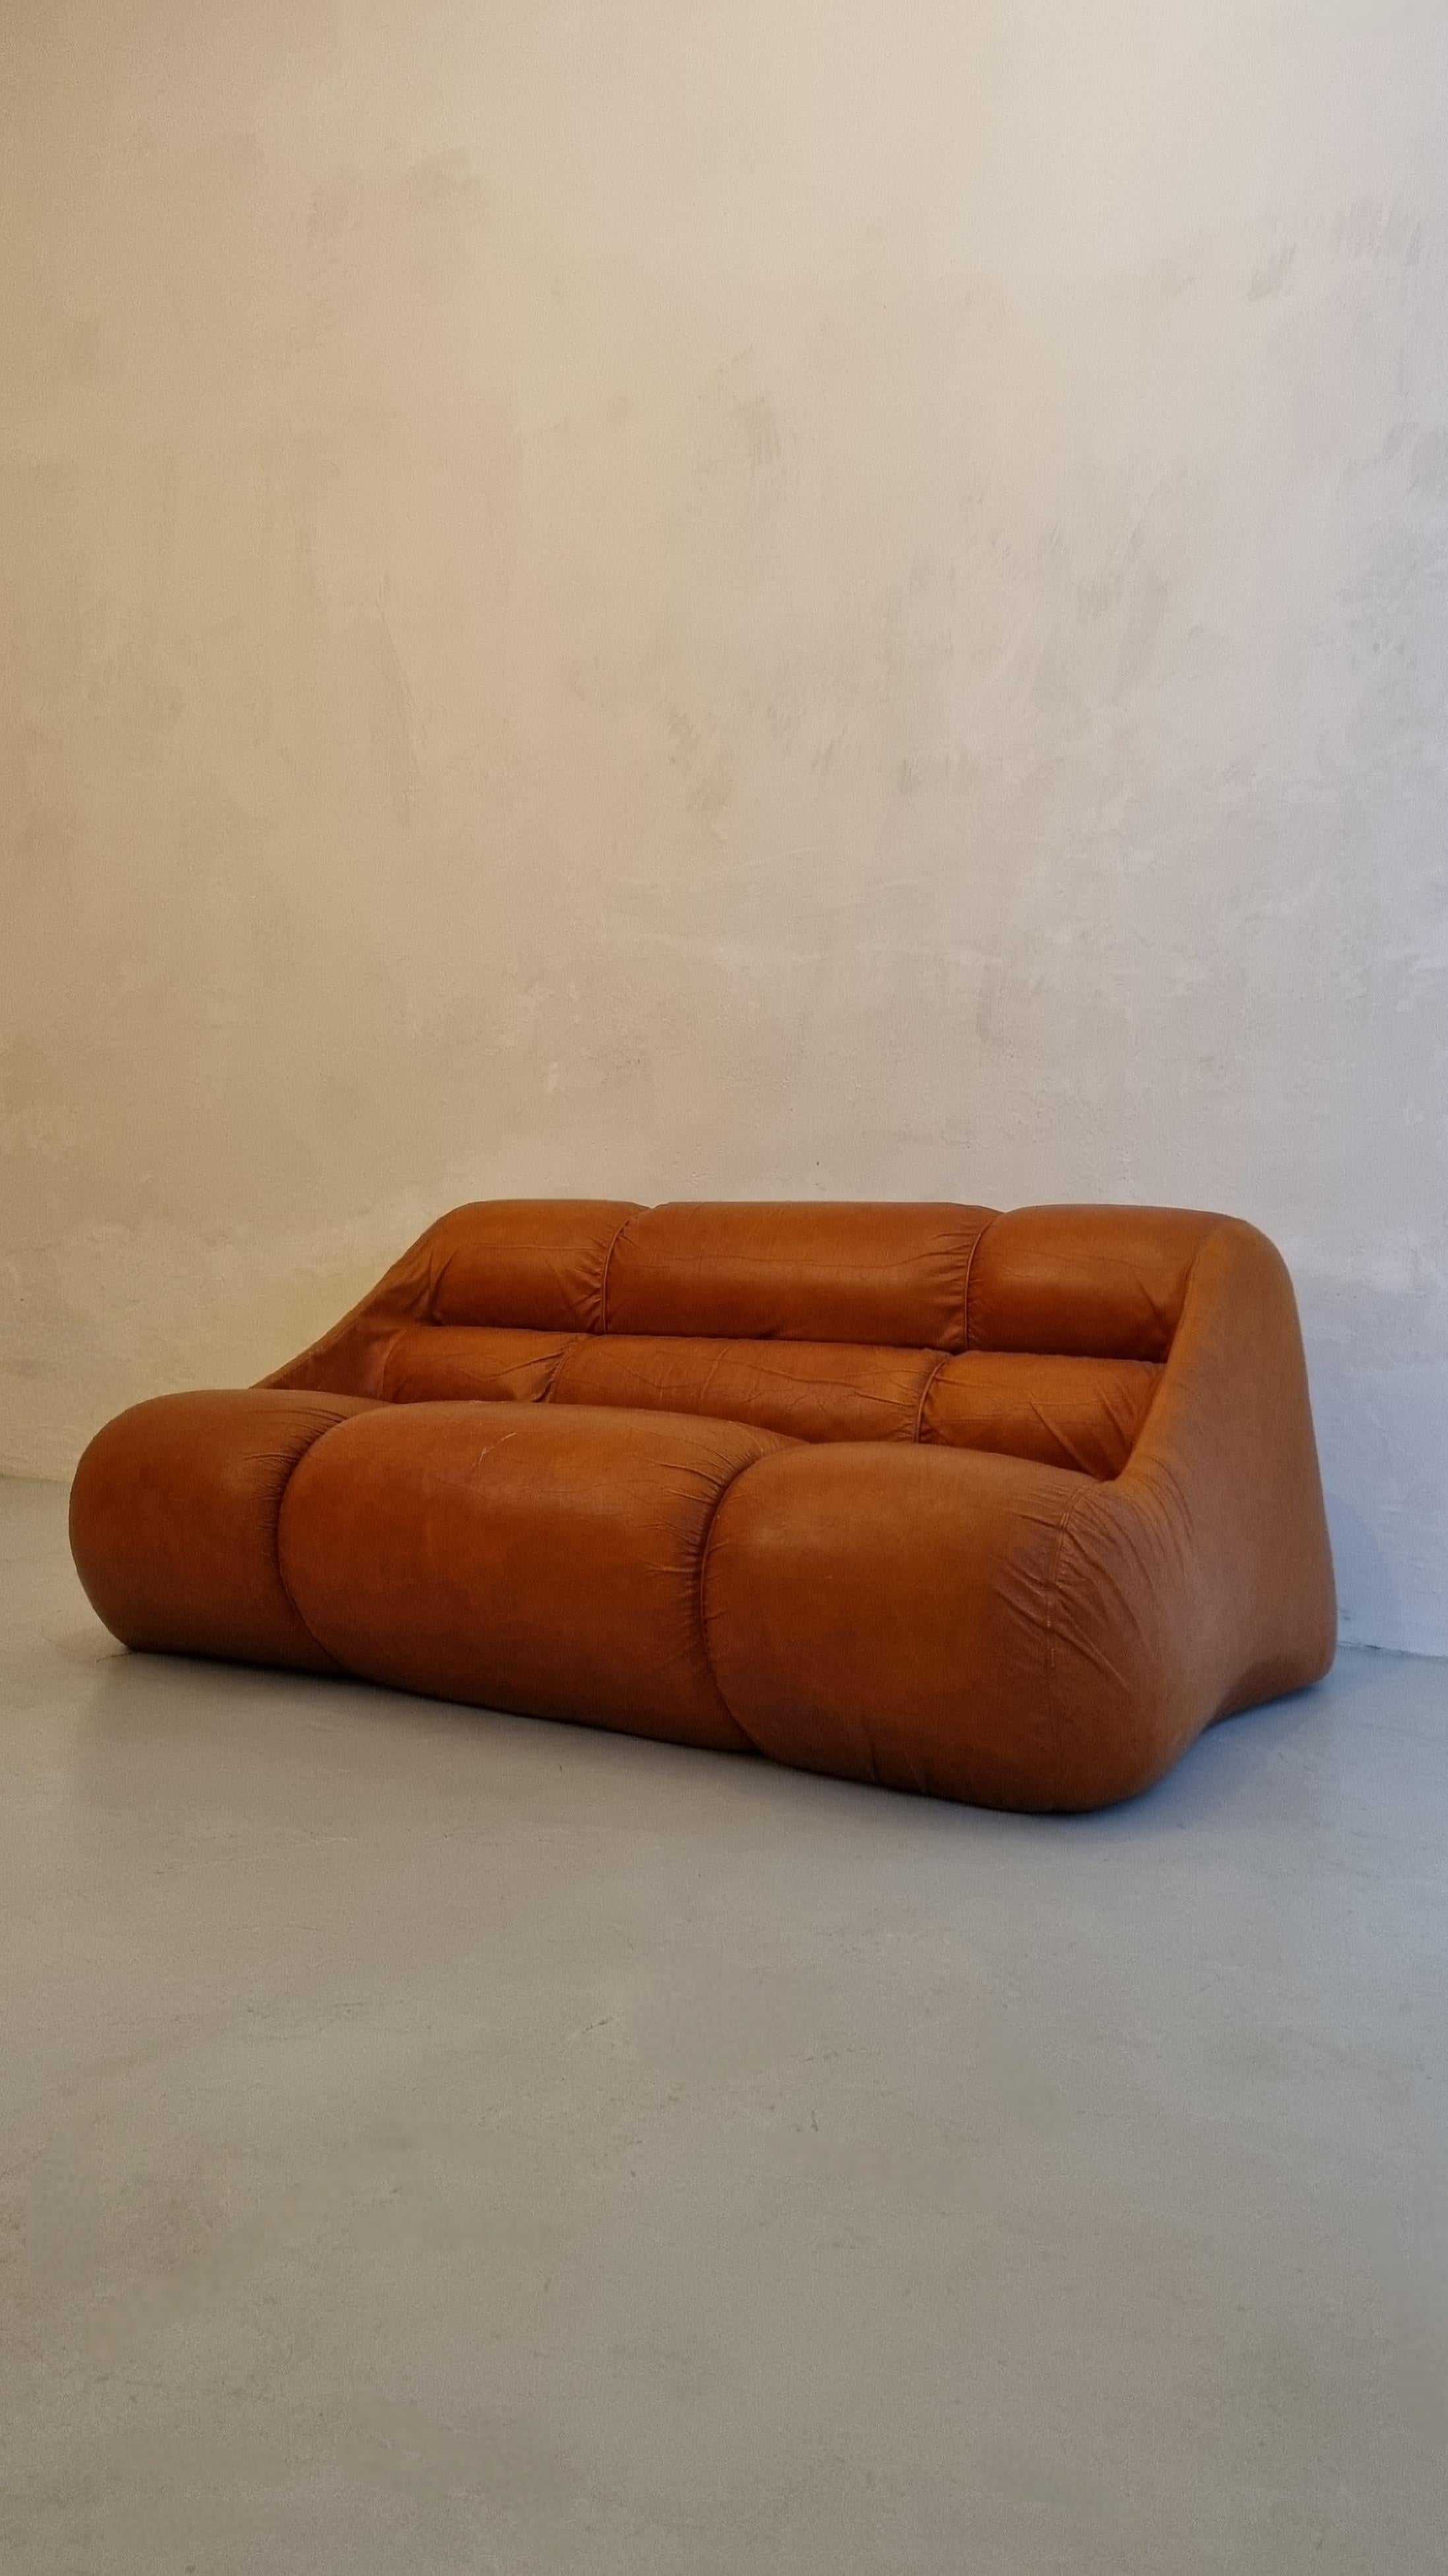 Ciuingam 2 seater sofa designed by the designer trio De Pas D' Urbino & Lomazzi for BBB Bonacina in 1967.
Foam rubber padding, original leather, plastic.
Good condition, the skin is slightly worn in the sitting.
Jonathan De Pas (Milan 1932 -